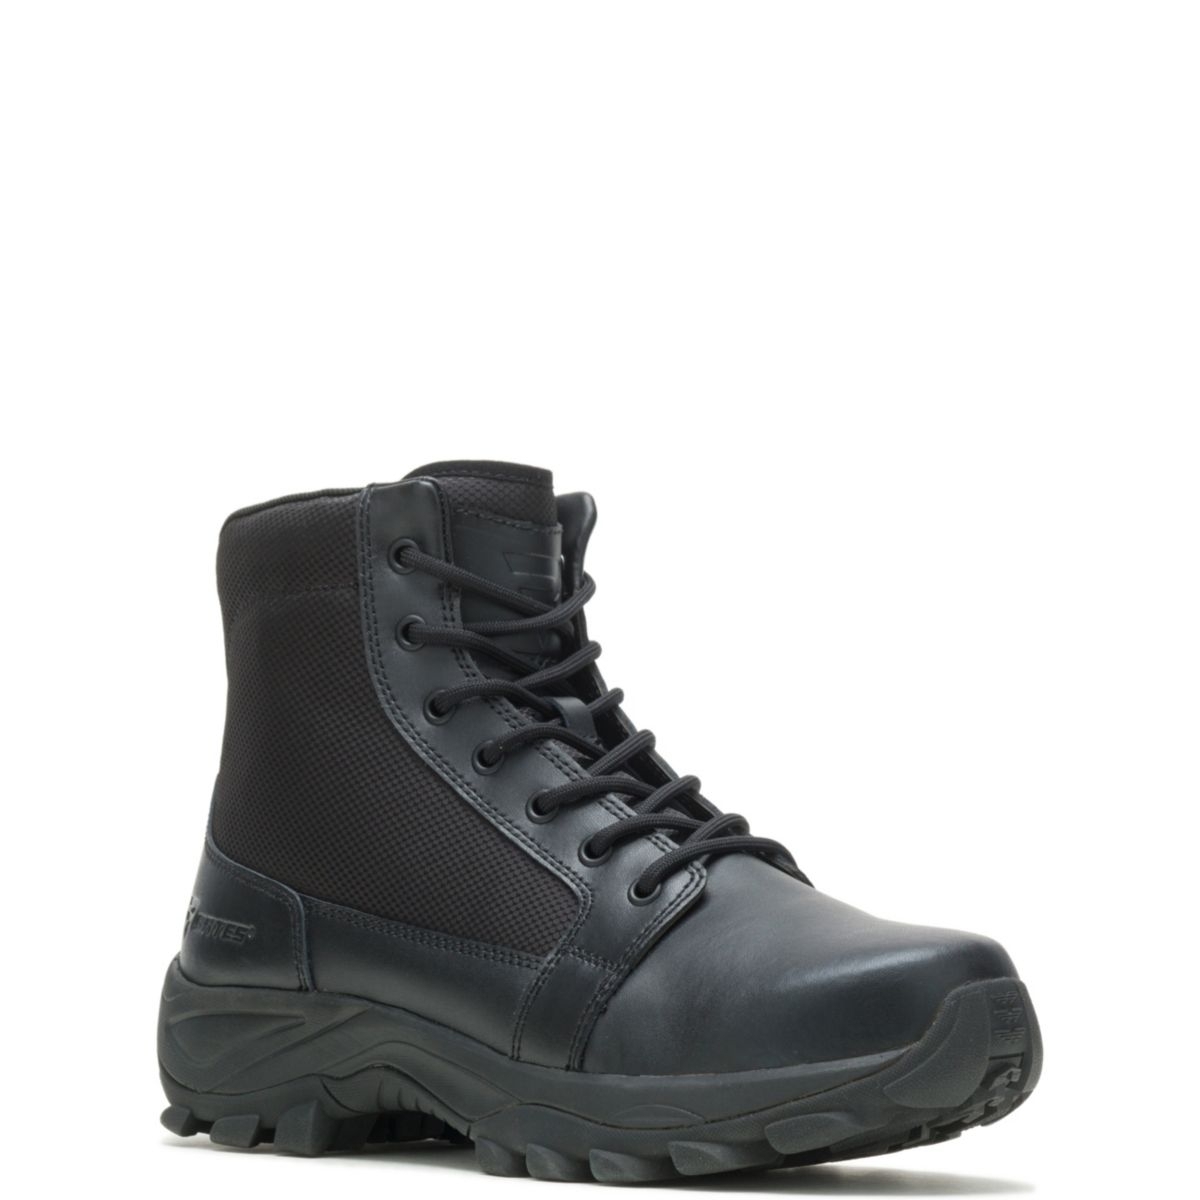 Bates Men's Fuse Mid 6-inch Side Zip Boot Black - E06506 BLACK - BLACK, 8-EW